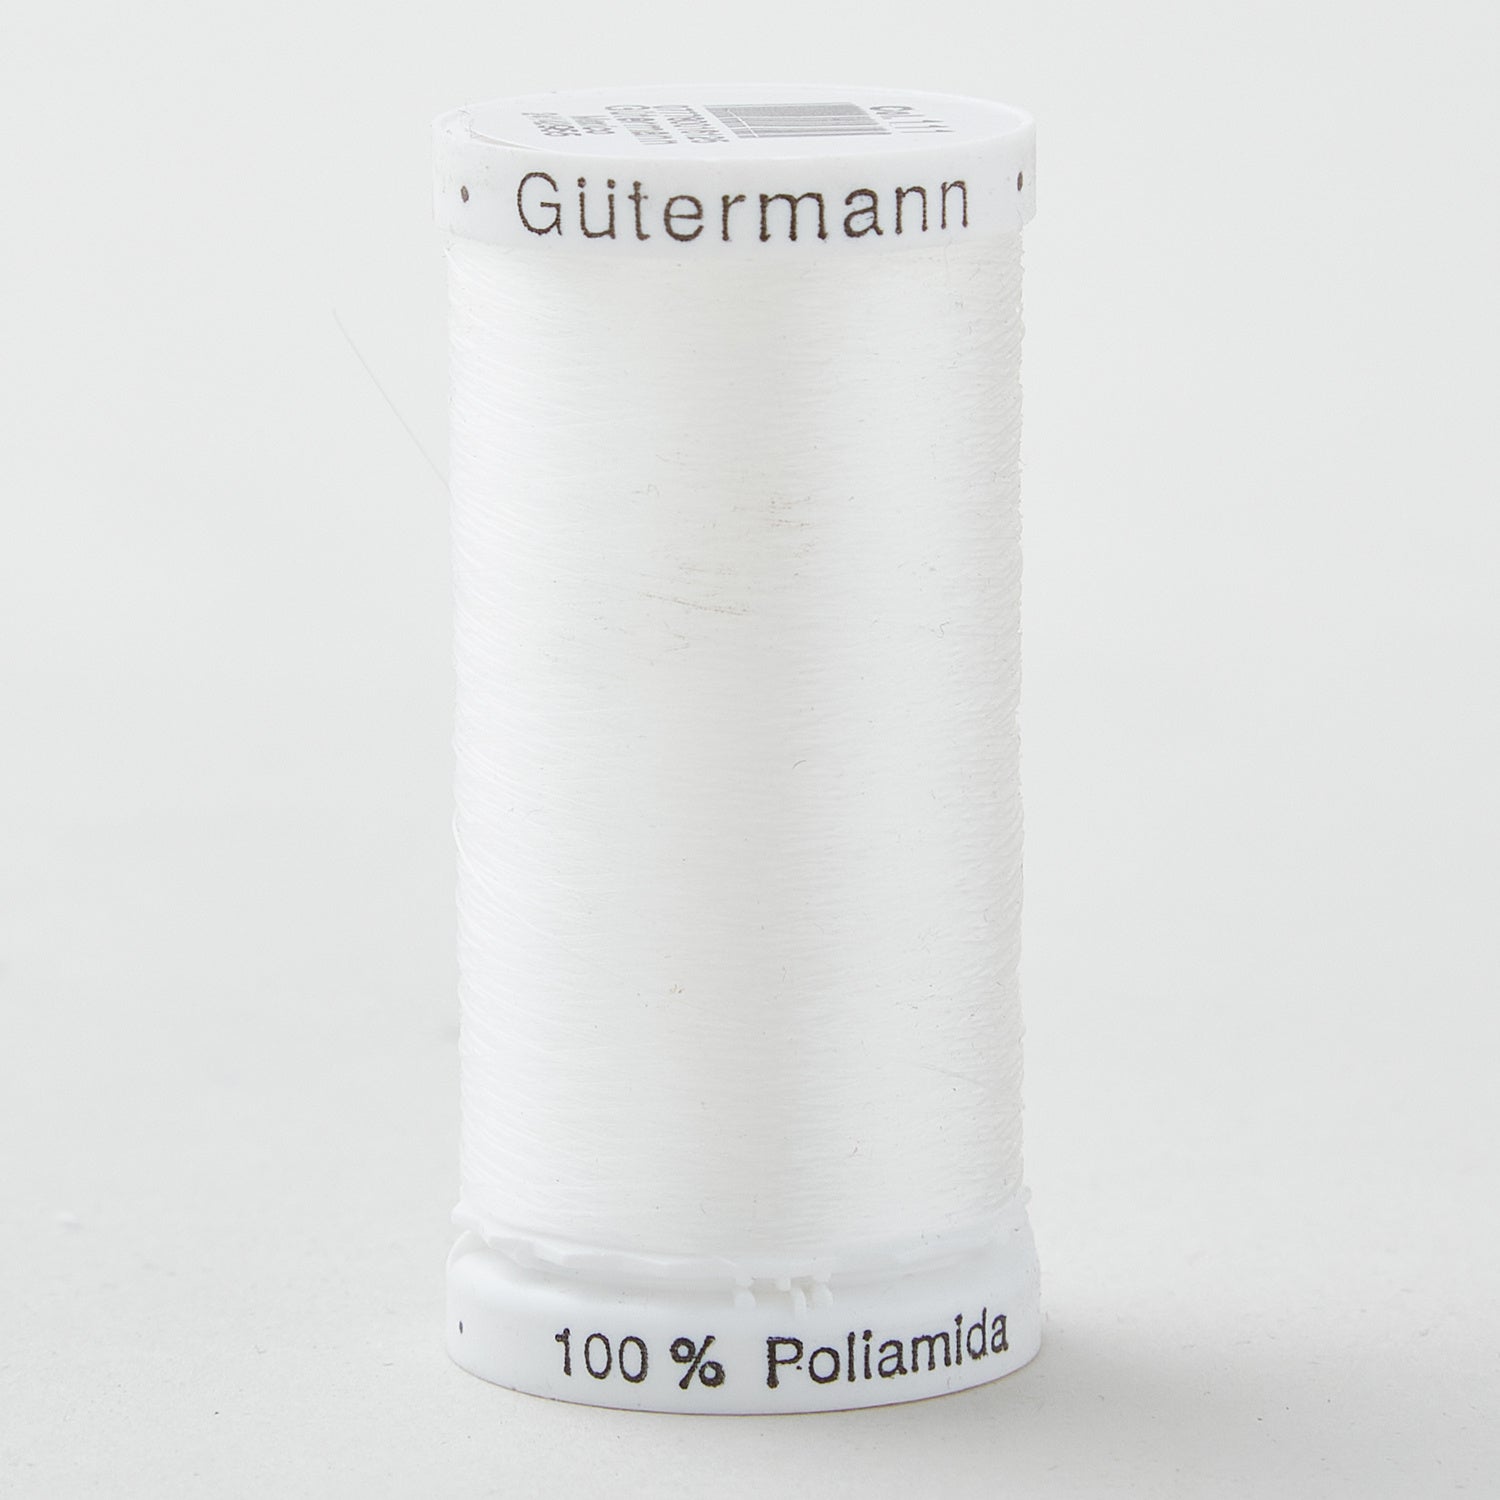 Gutermann Invisible Thread - Clear